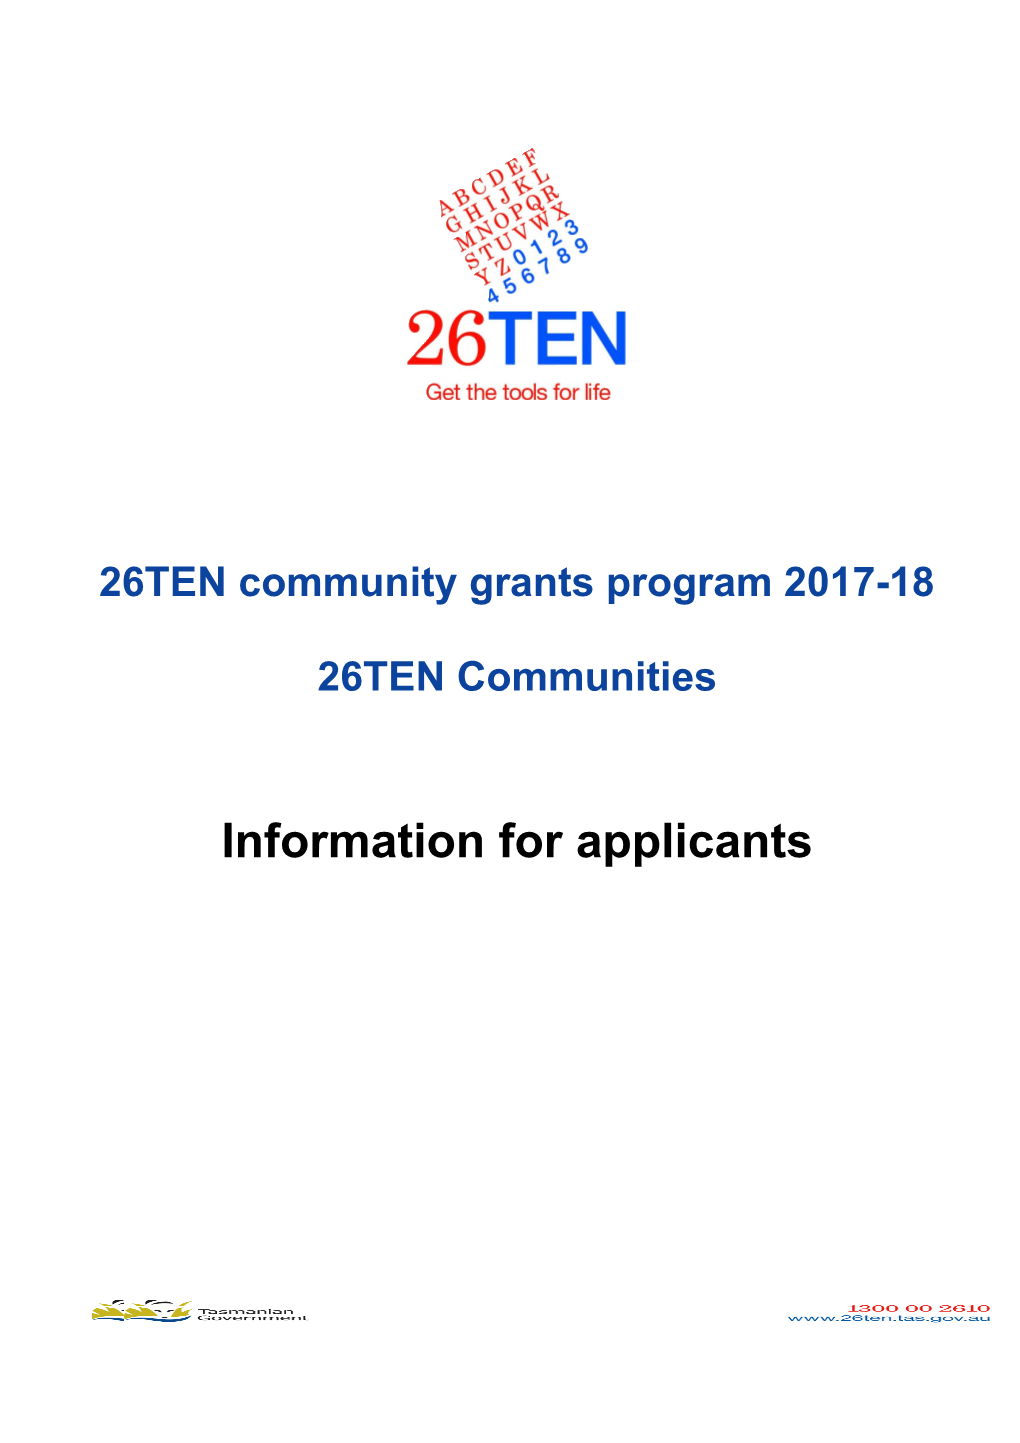 26TEN Communitygrants Program 2017-18